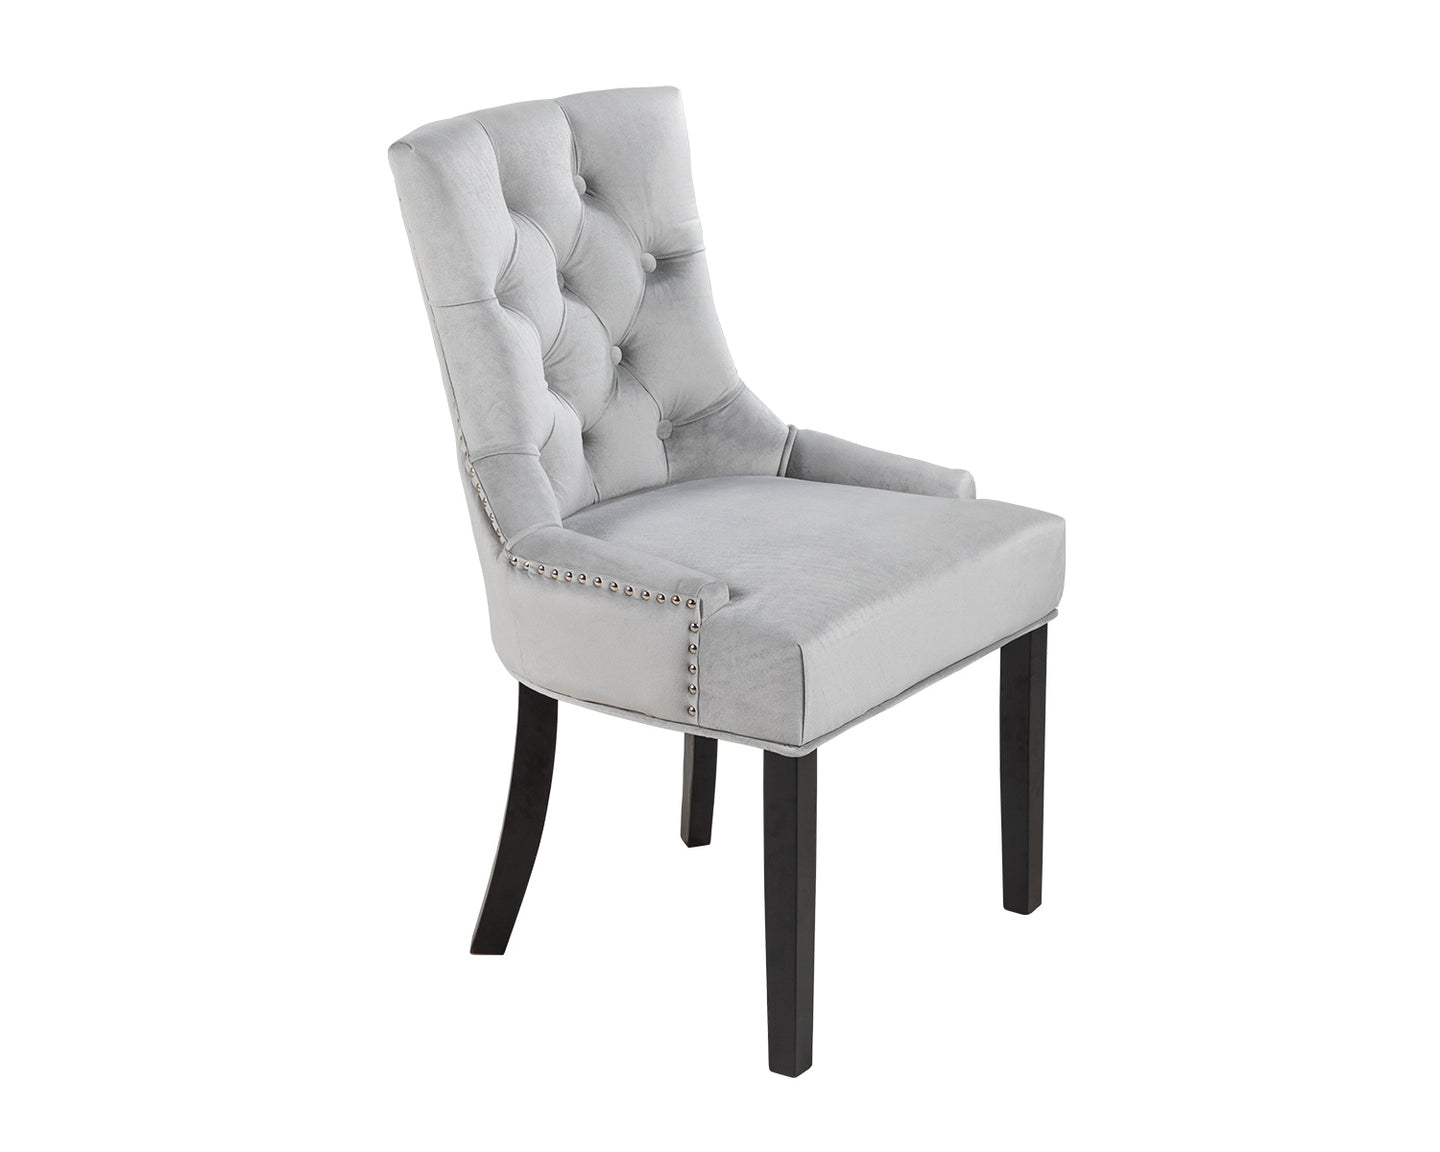 Verona Dining Chair in Light Grey Velvet with Chrome Knocker and Black Legs